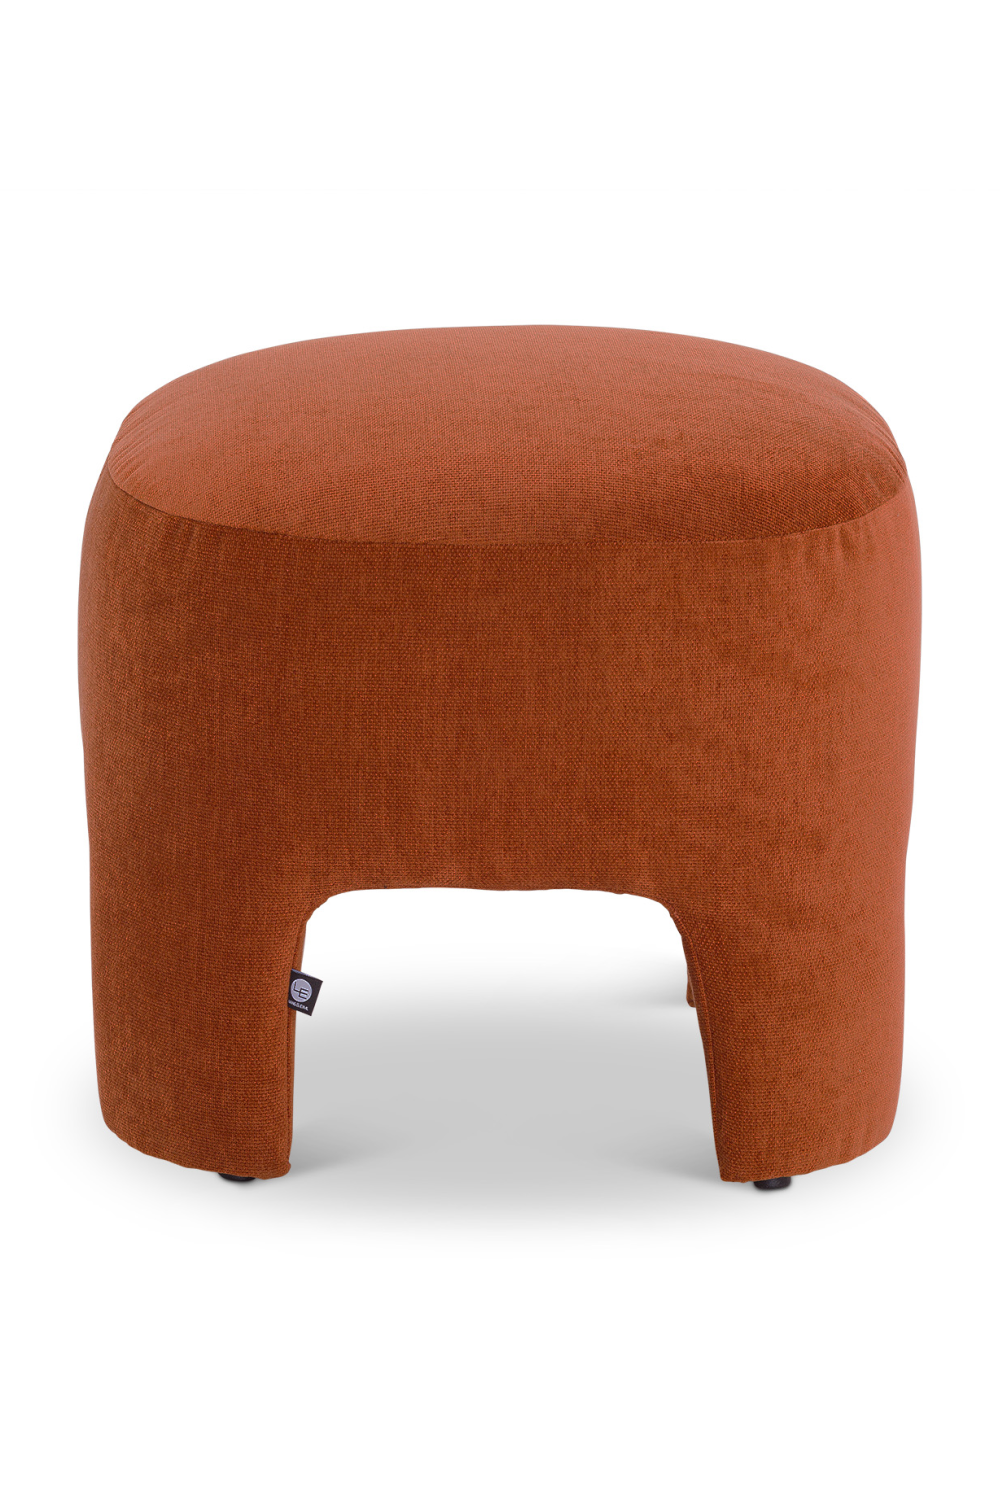 Upholstered Modern Stool | Liang & Eimil Anderson | Oroa.com